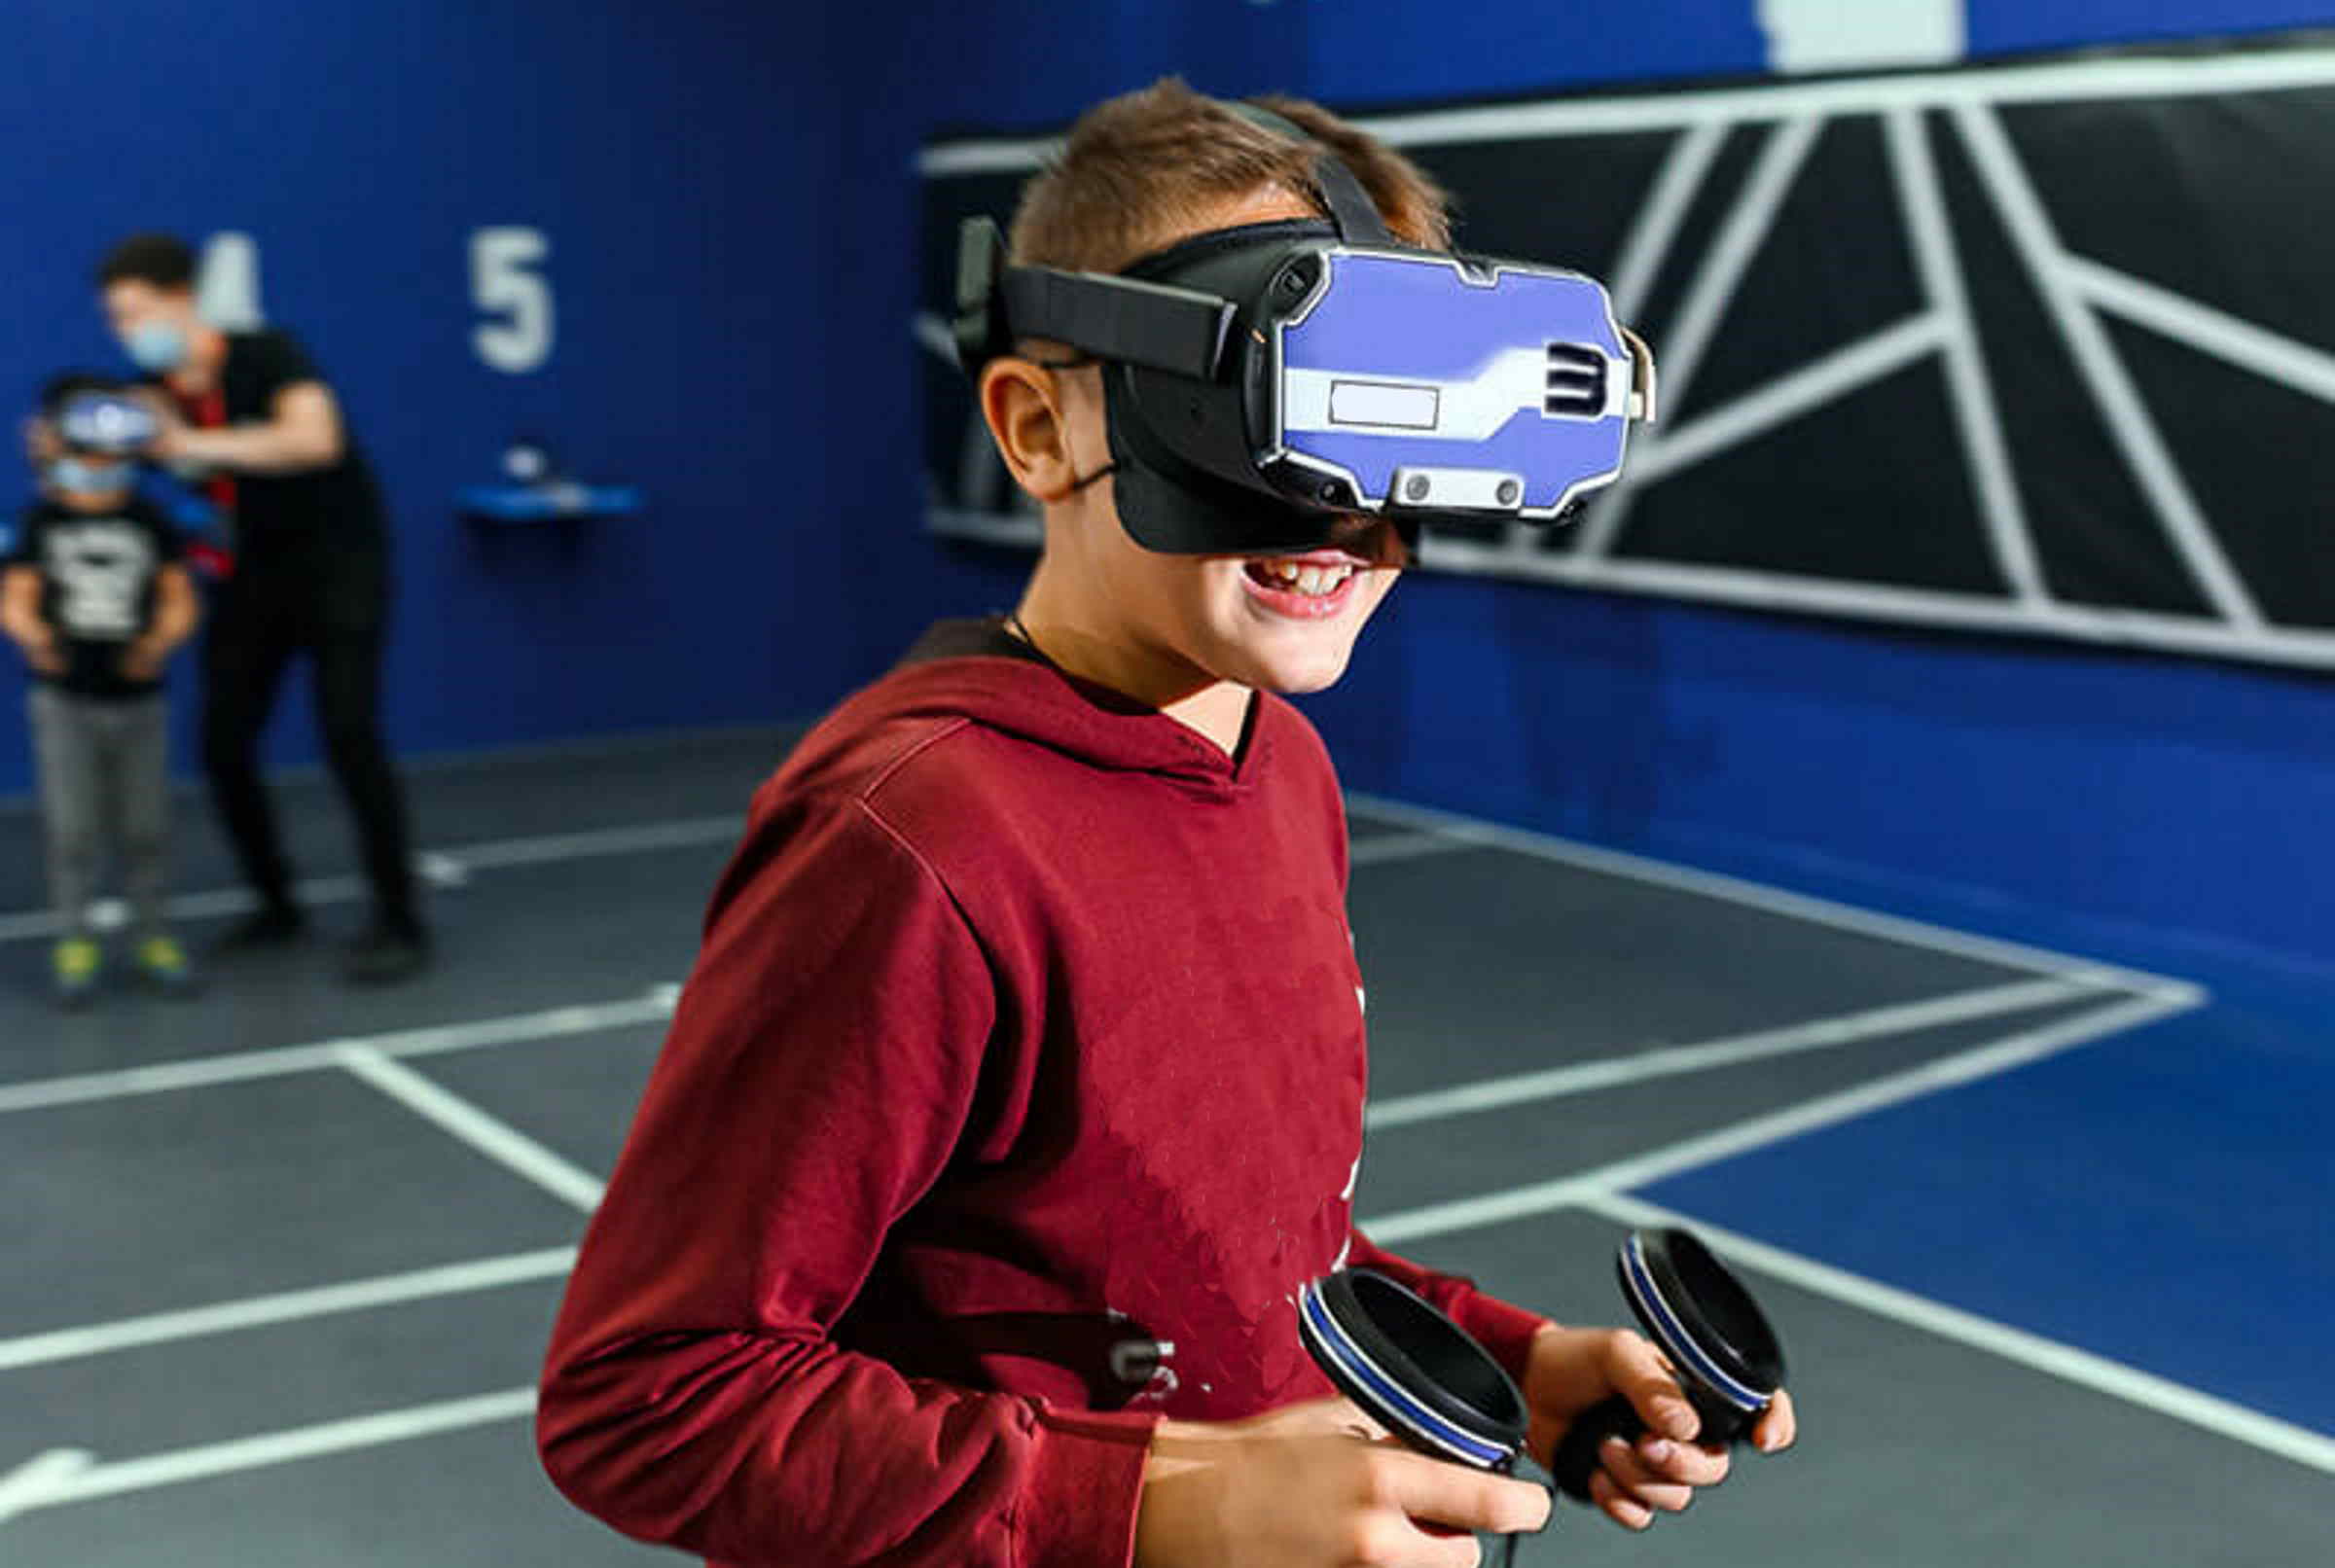 Vr арена warpoint. Виртуальная реальность WARPOINT. Варпоинт Арена виртуальной реальности. WARPOINT, Арена виртуальной реальности Тюмень. Виртуальная реальность на Arena VR.